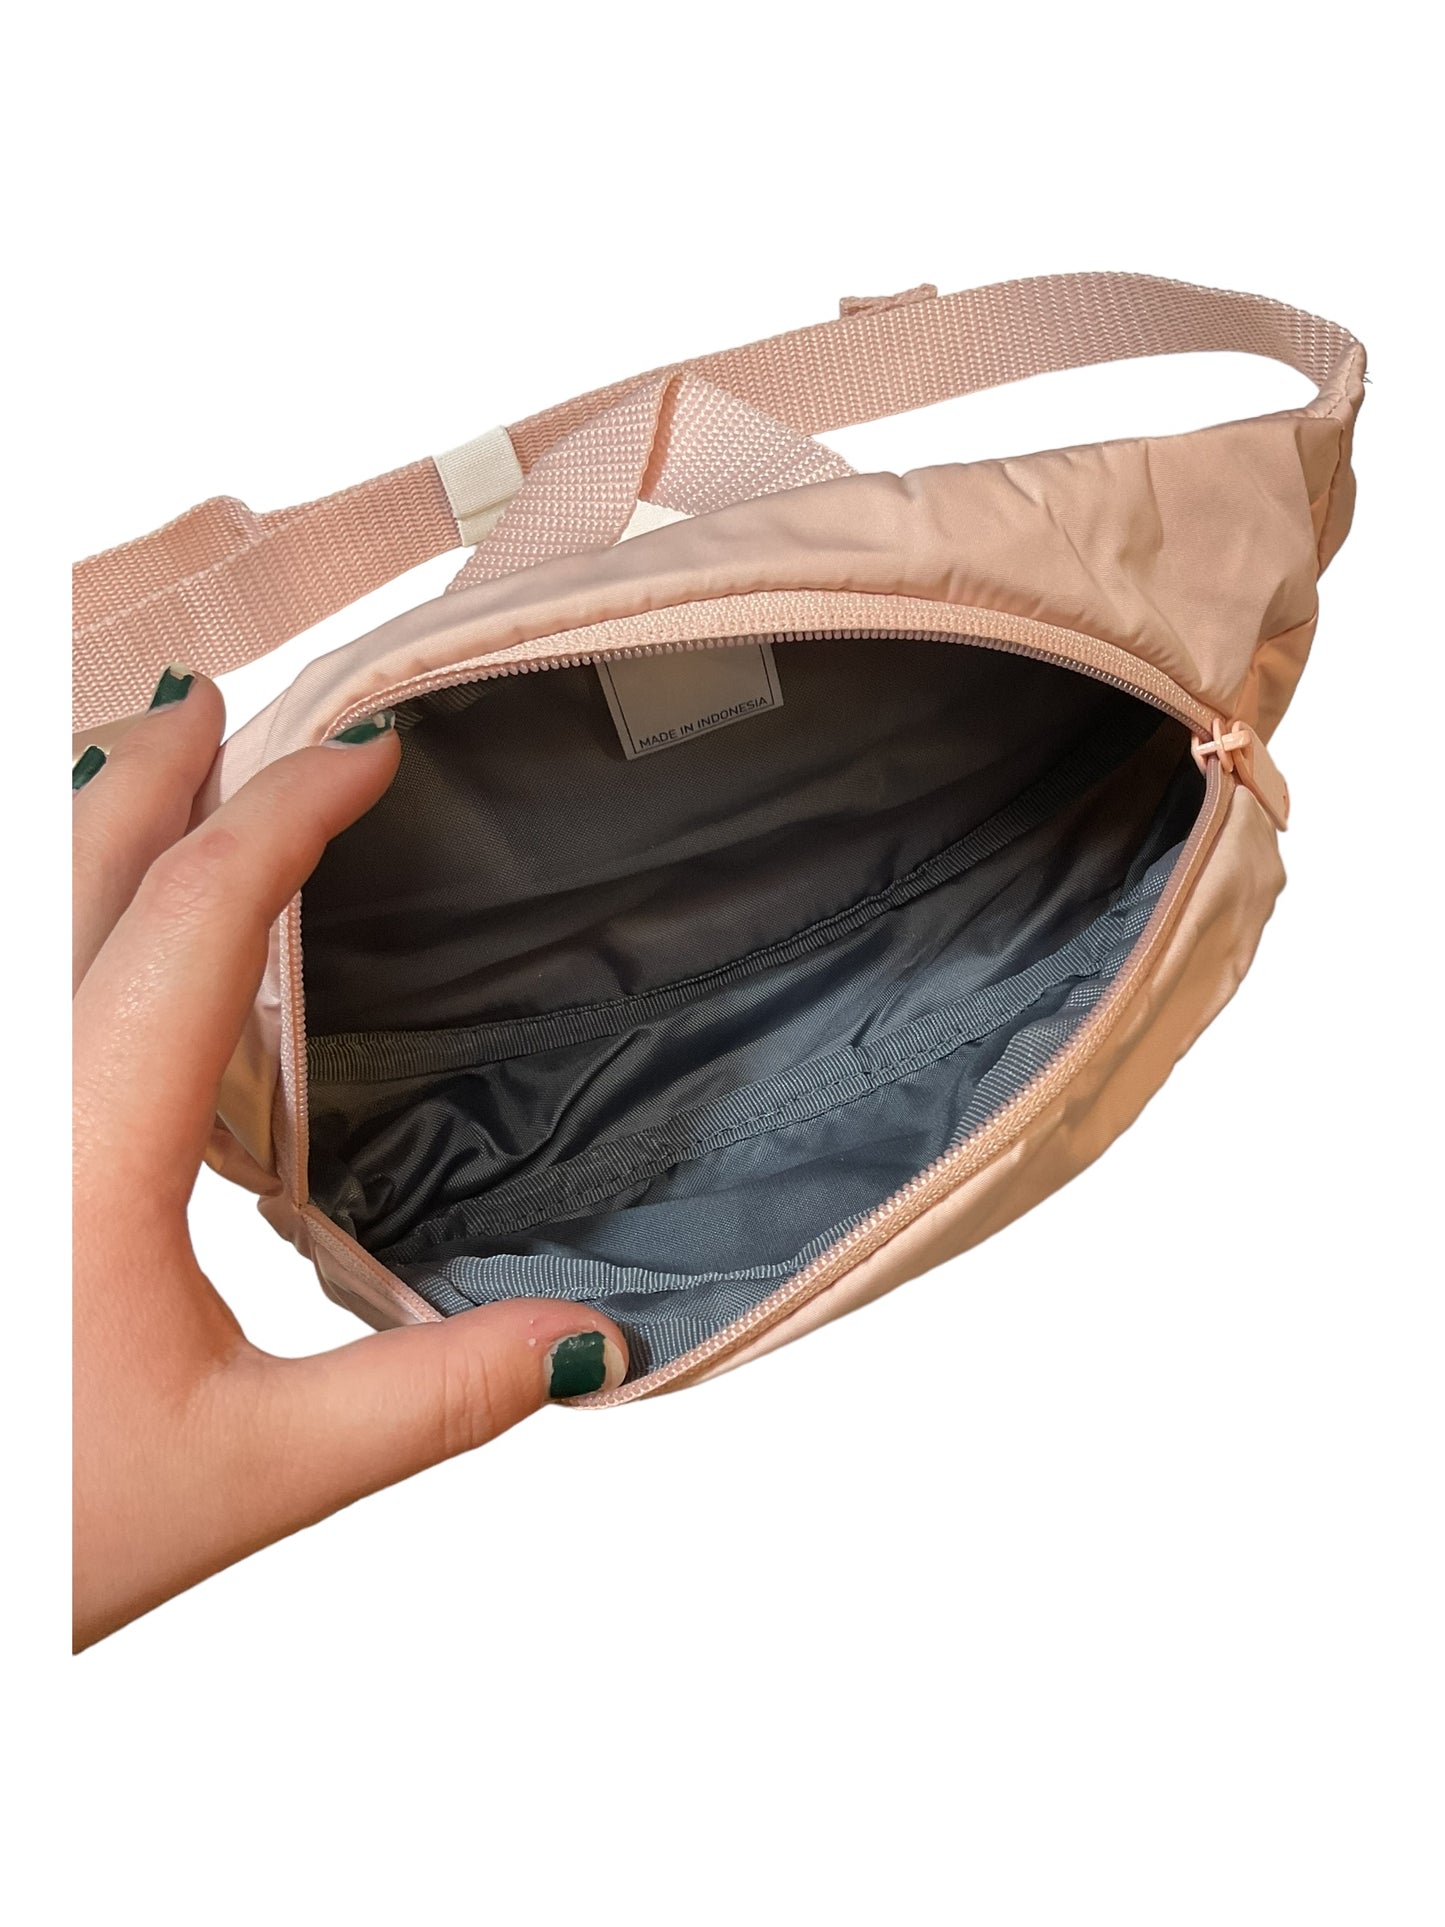 Belt Bag By Adidas  Size: Large